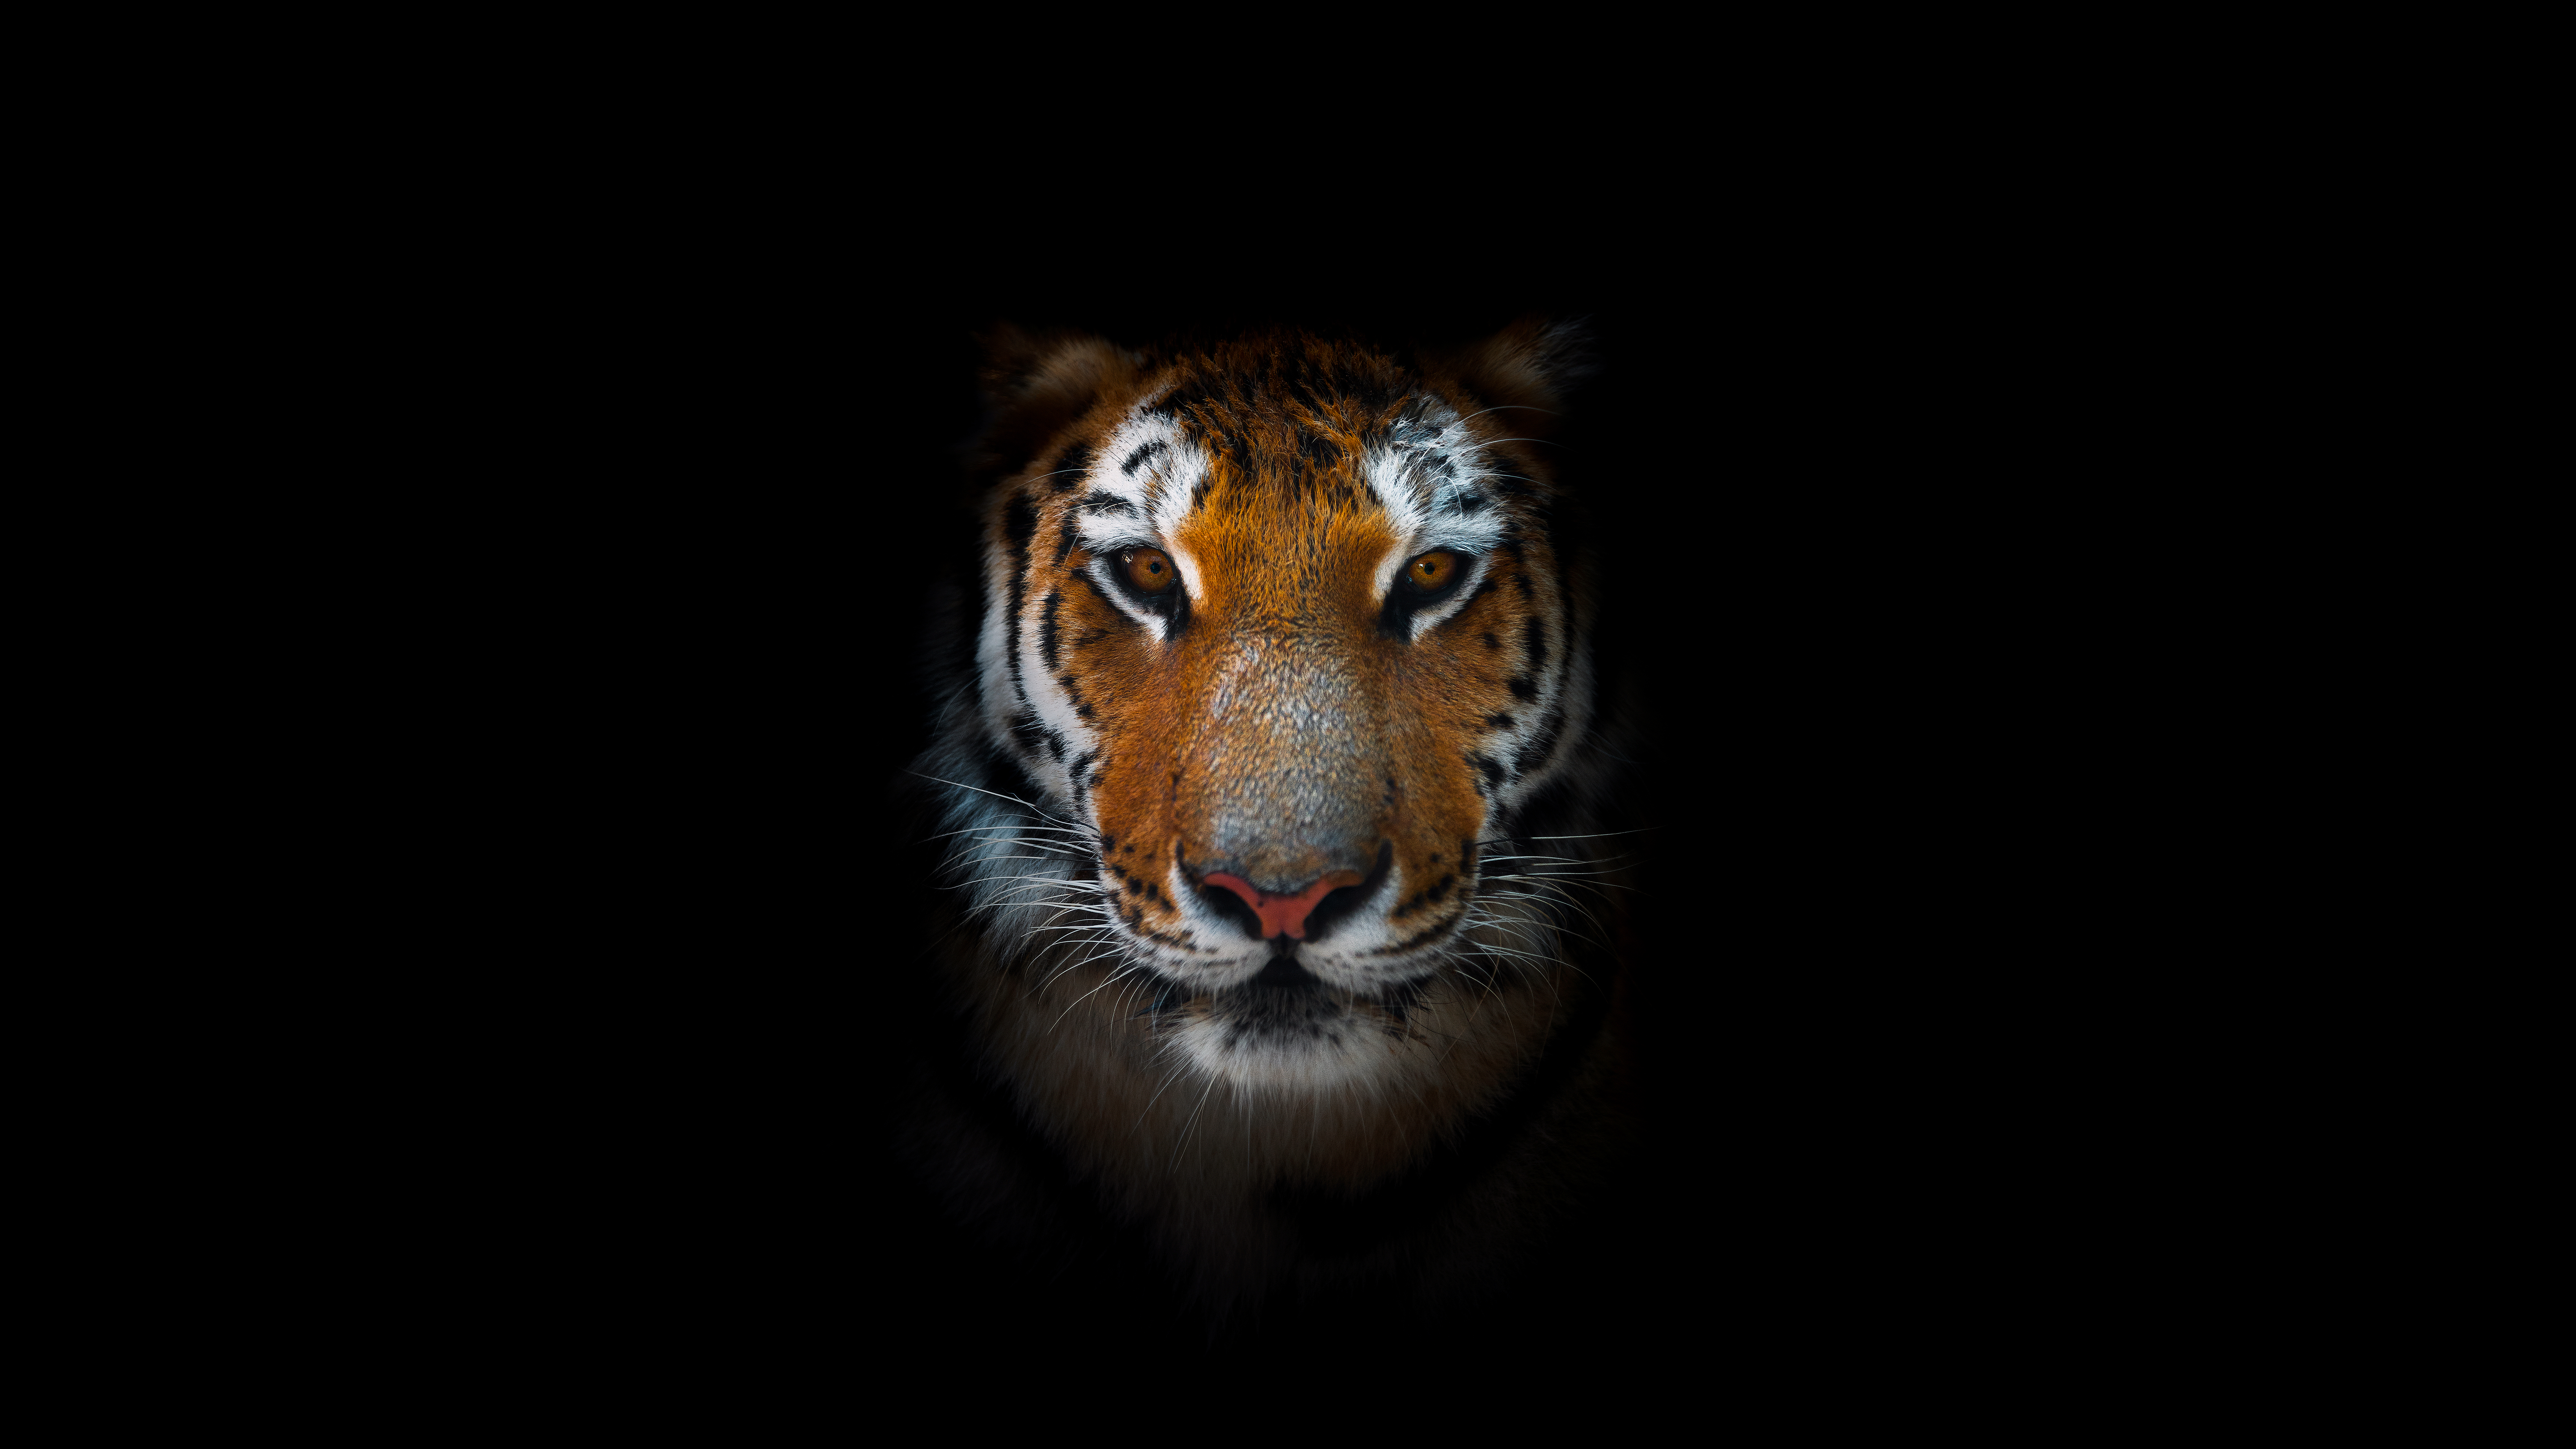 Animal Bengal Tiger Swimming 4k Ultra Hd Wallpaper For Desktop Laptop  Tablet And Mobile Phones  Wallpapers13com